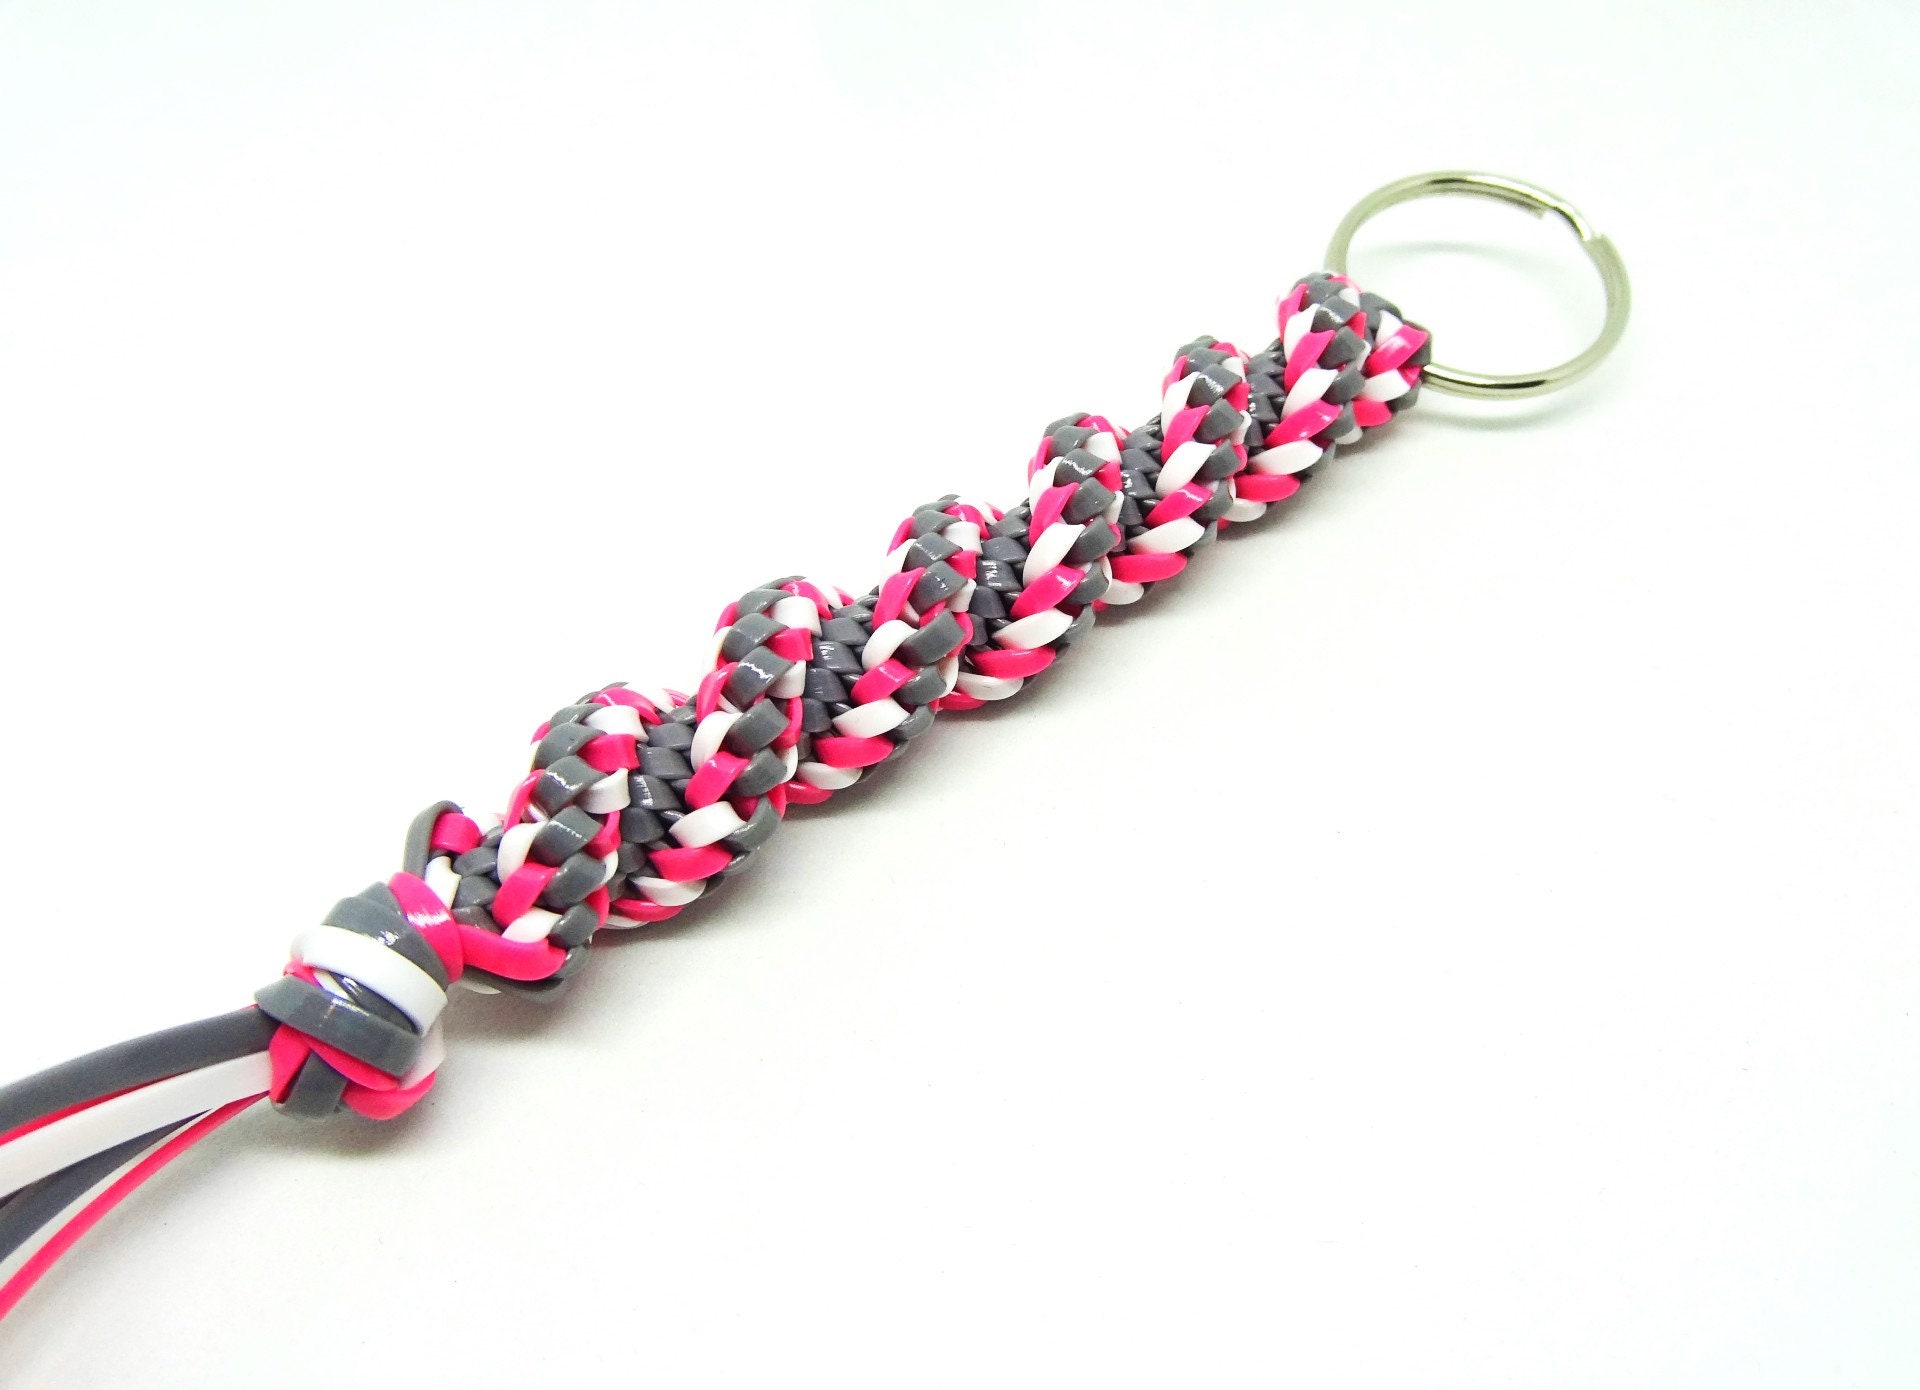 Boondoggle keychain, string keychain, plastic lacing key chain, blue, pink,  and white keychain, colorful keychain